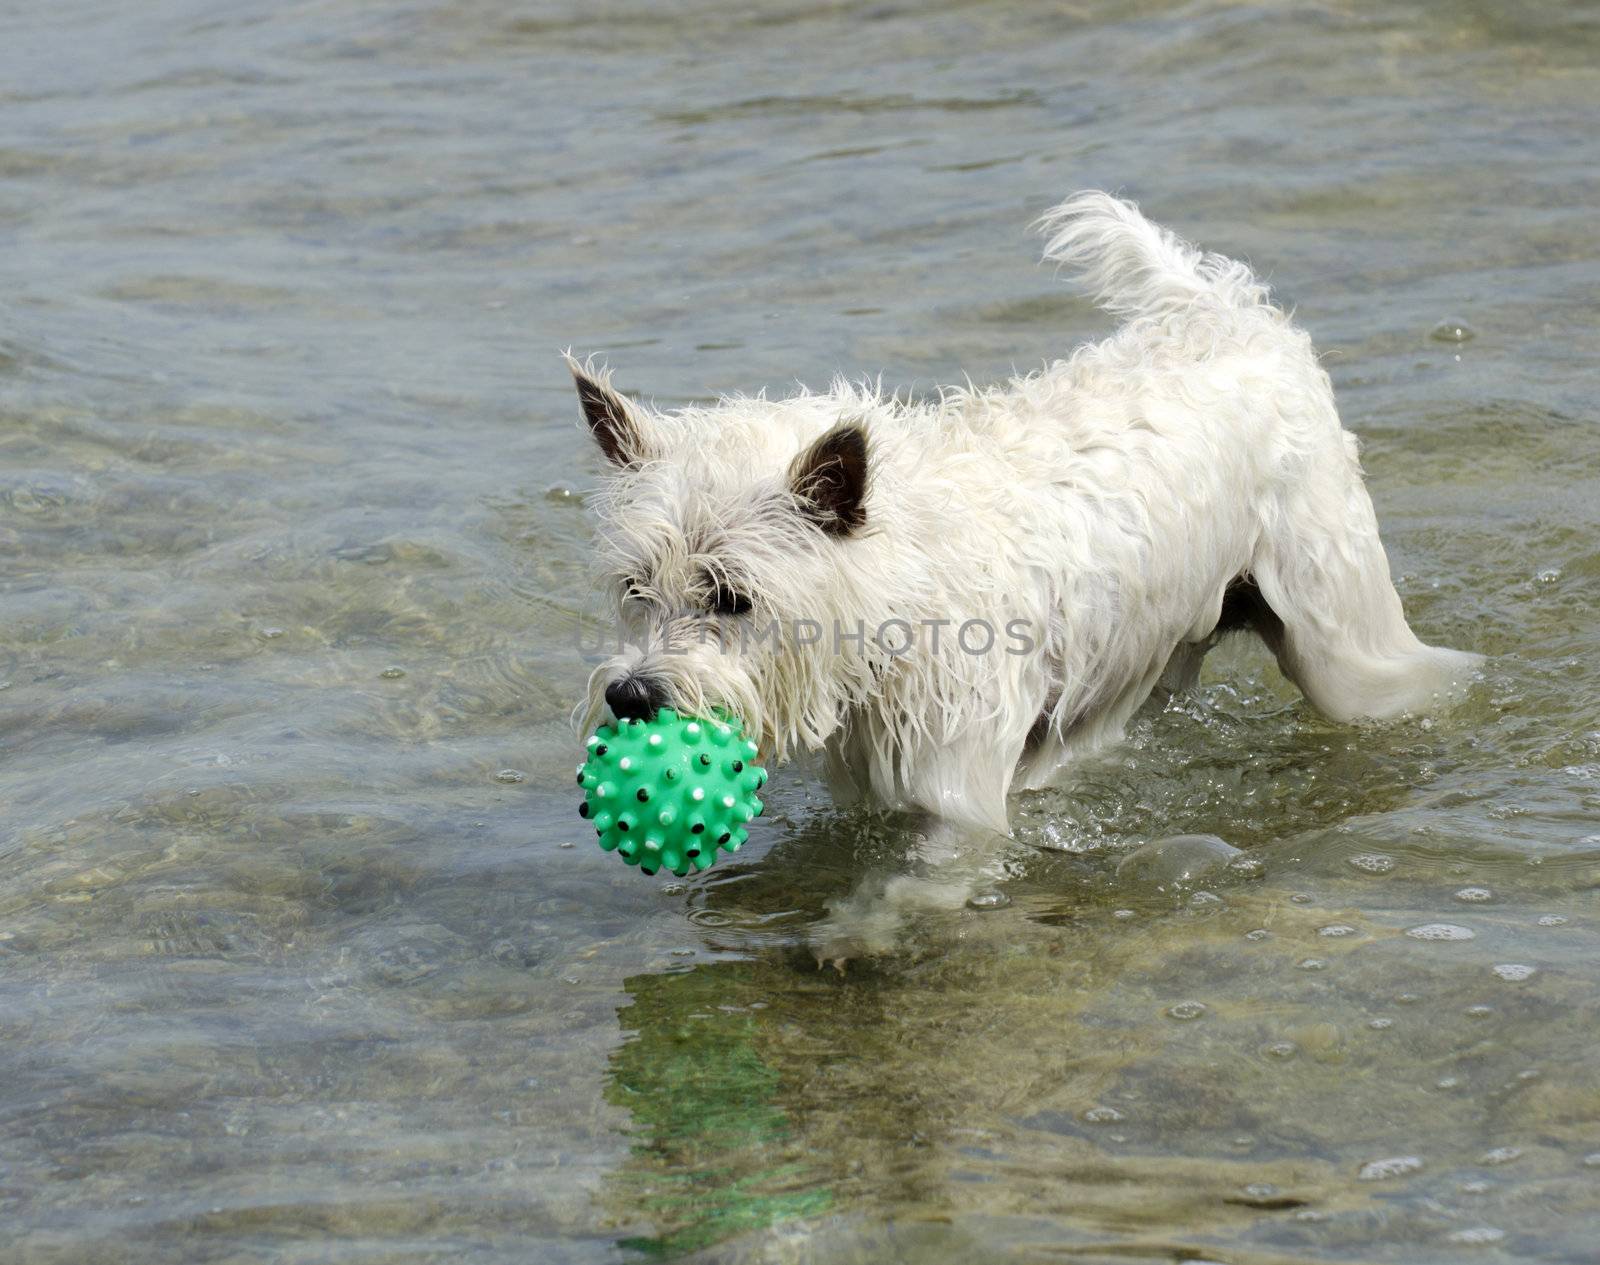 West Highland White Terrier by Gordo25